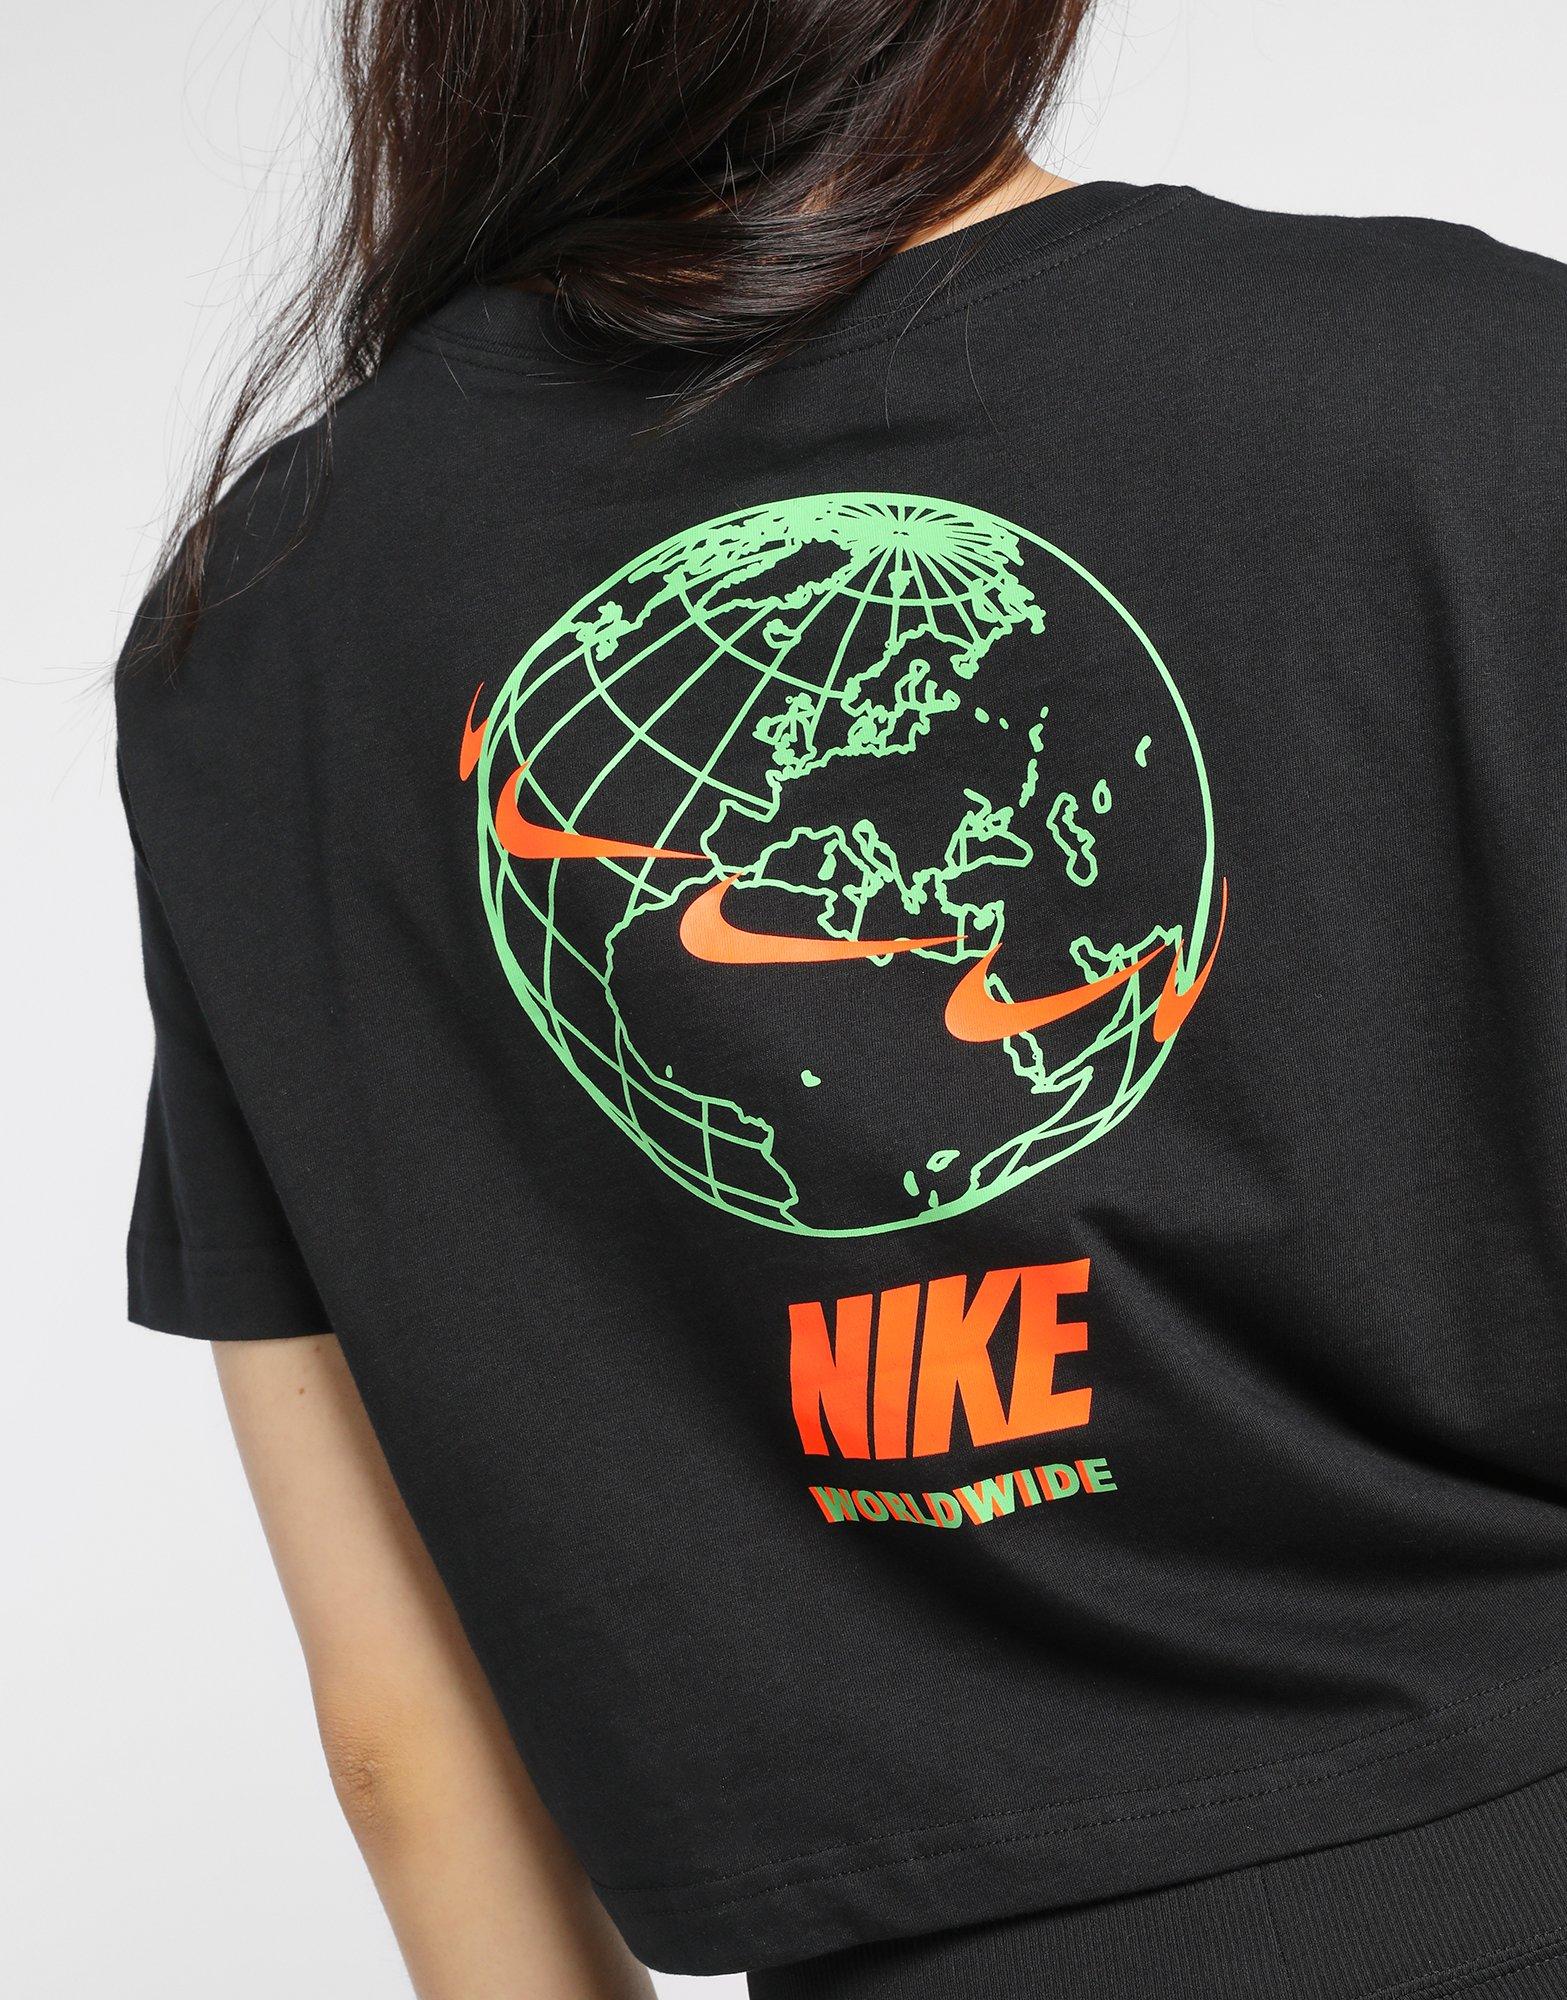 nike worldwide shirt